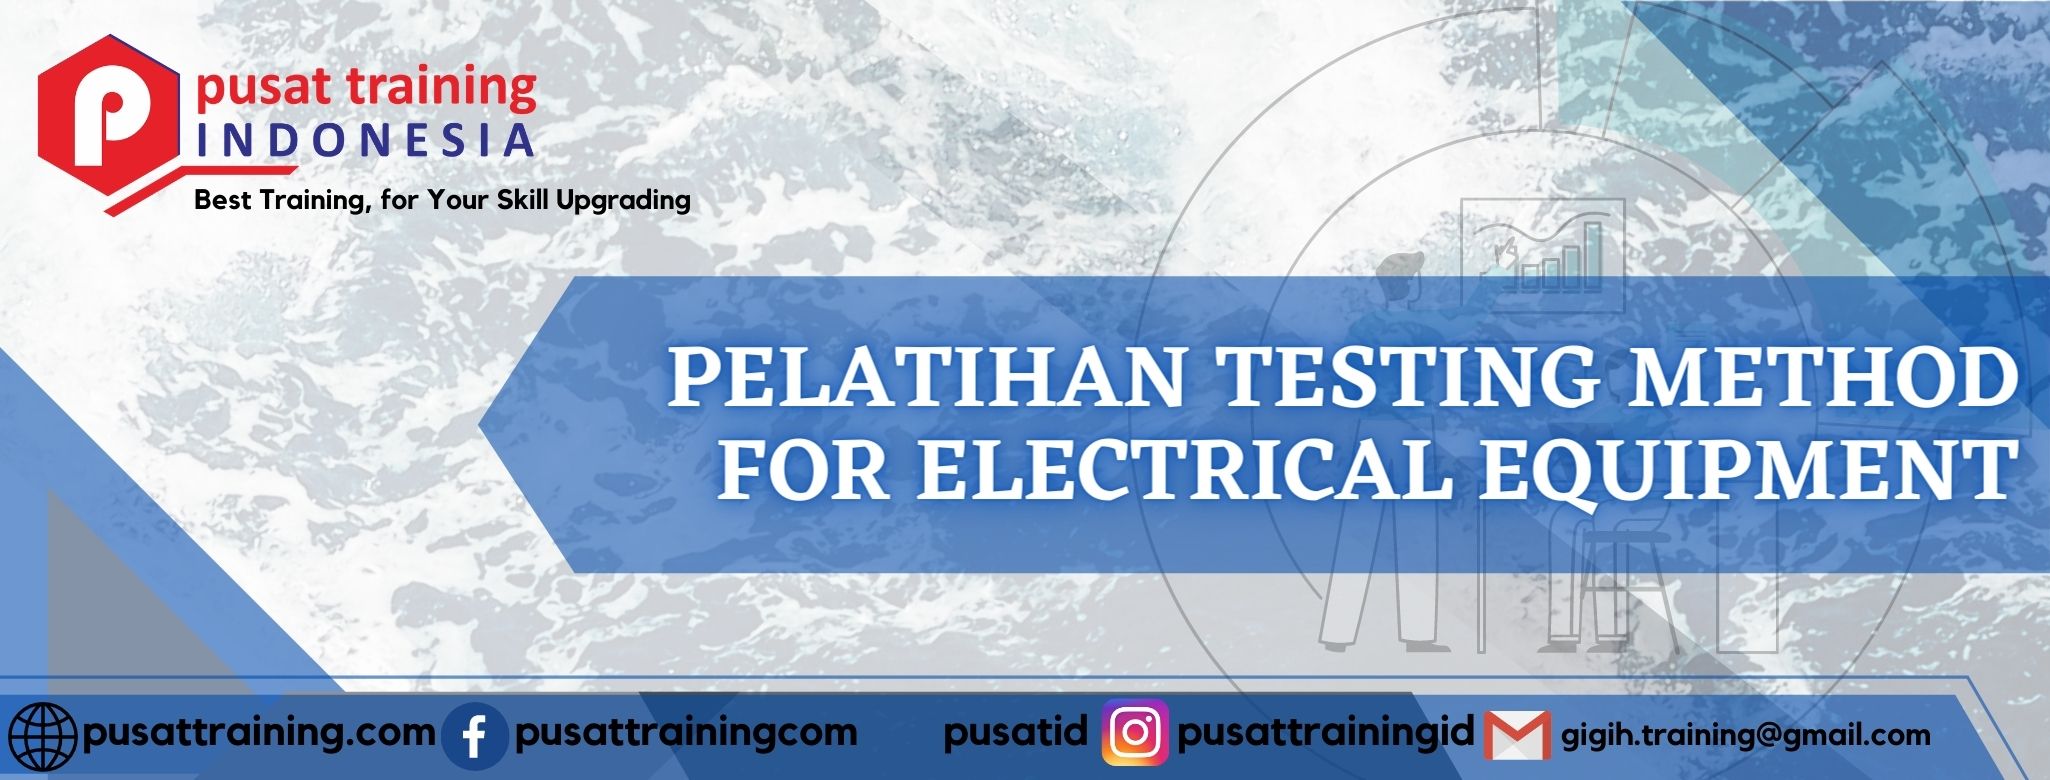 pelatihan-testing-method-for-electrical-equipment